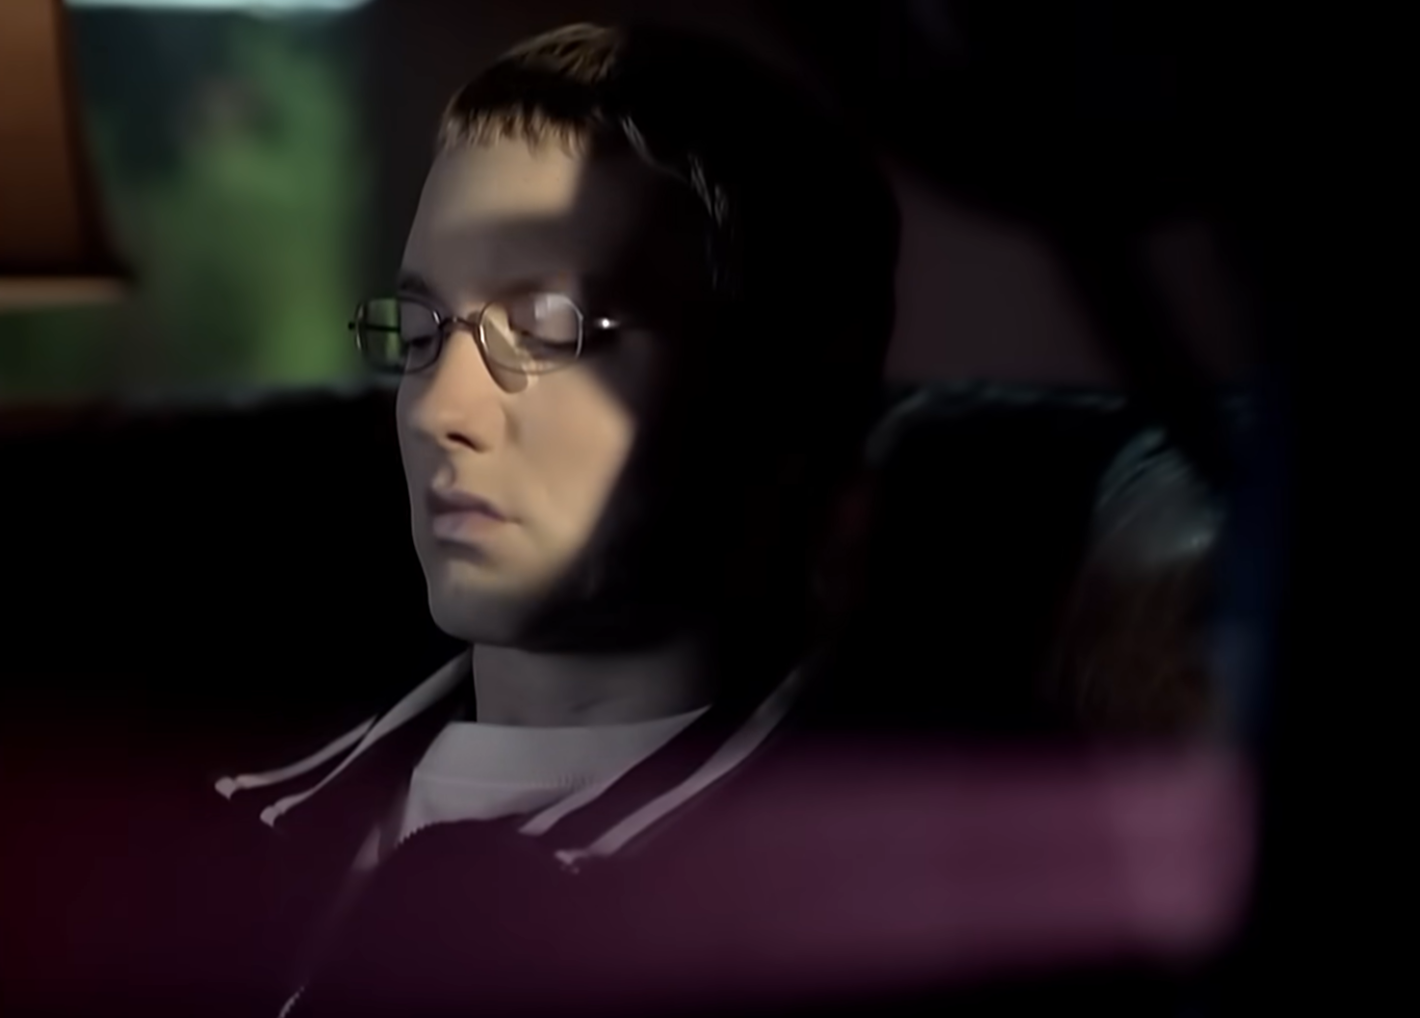 eminem in glasses sitting in a car